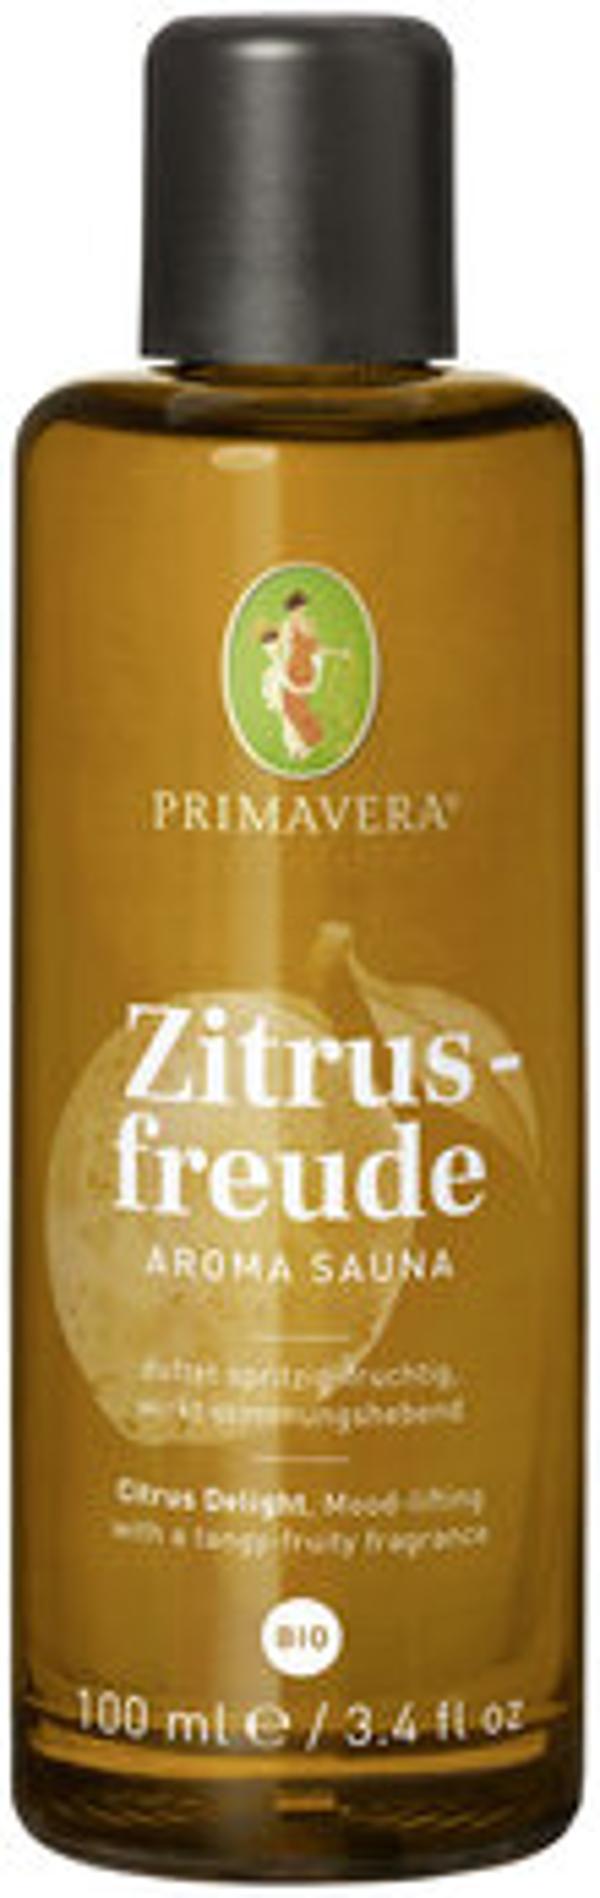 Produktfoto zu Aroma Sauna Zitrusfreude, 100 ml